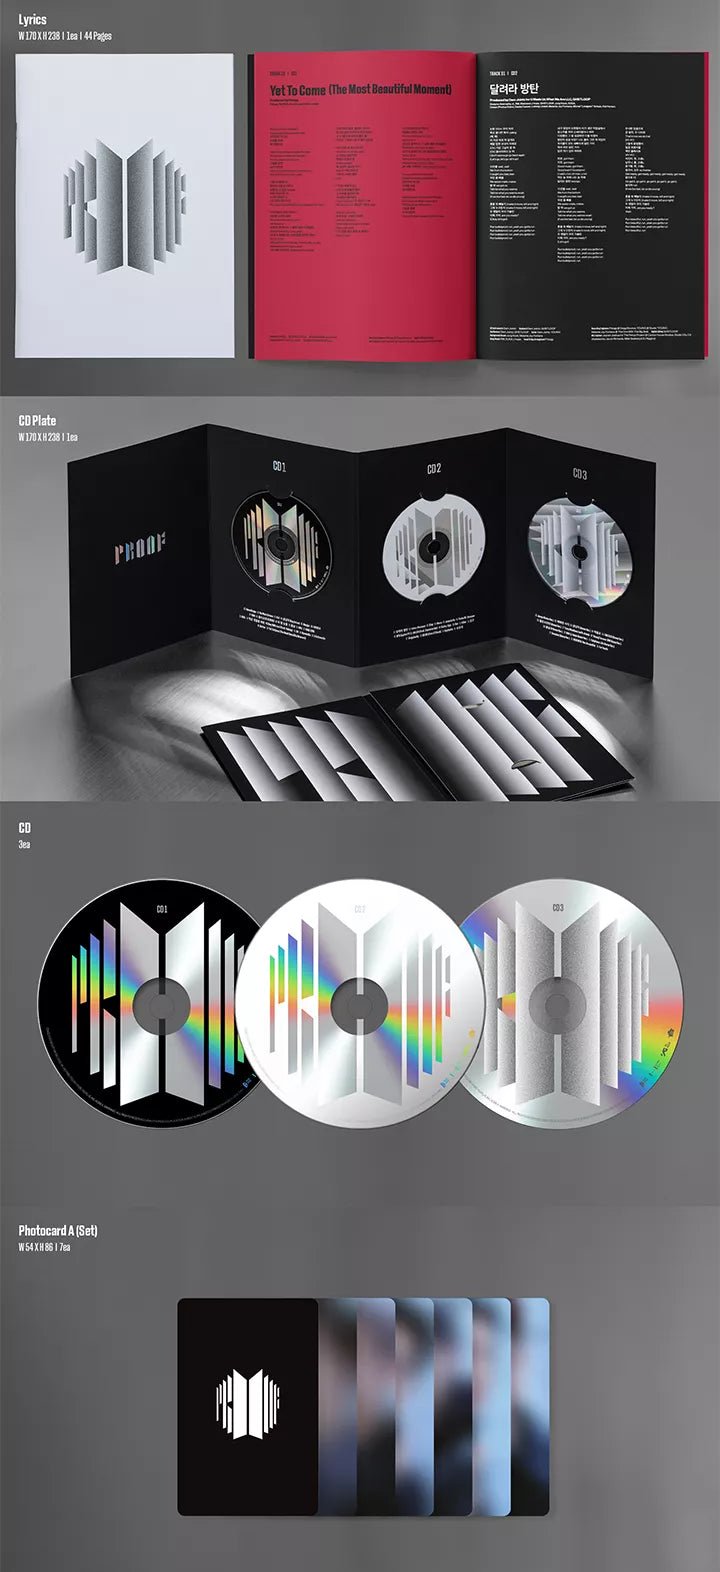 BTS - Proof Standard Edition Album + WeVerse Gift – Seoul-Mate